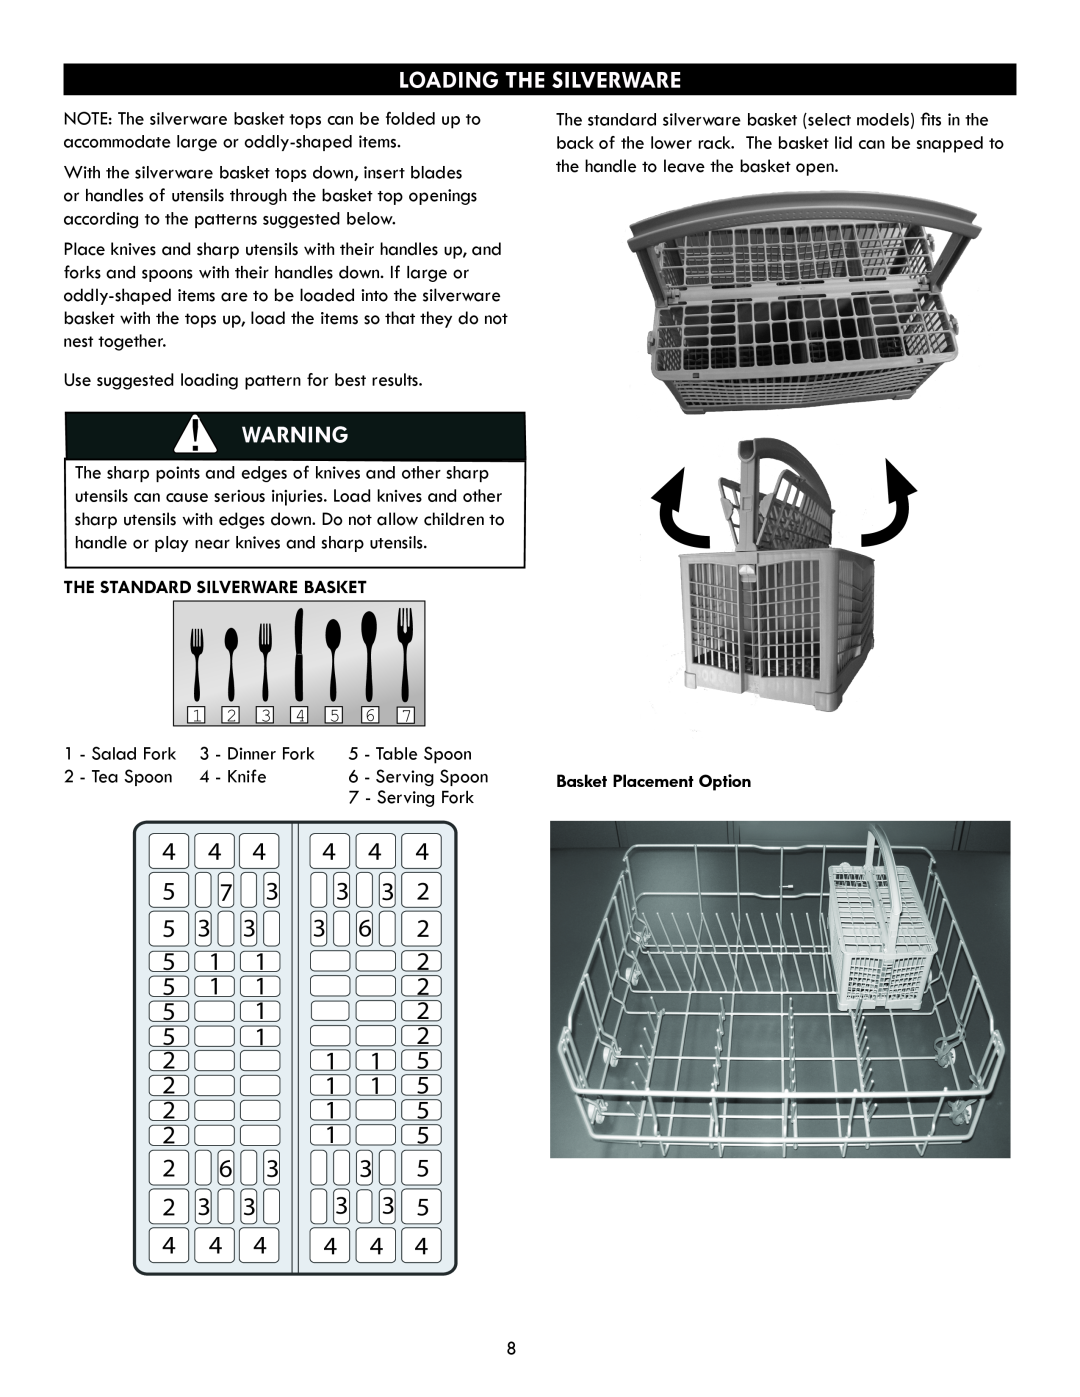 Kenmore 630.7793 manual Loading The Silverware, The Standard Silverware Basket, Basket Placement Option 